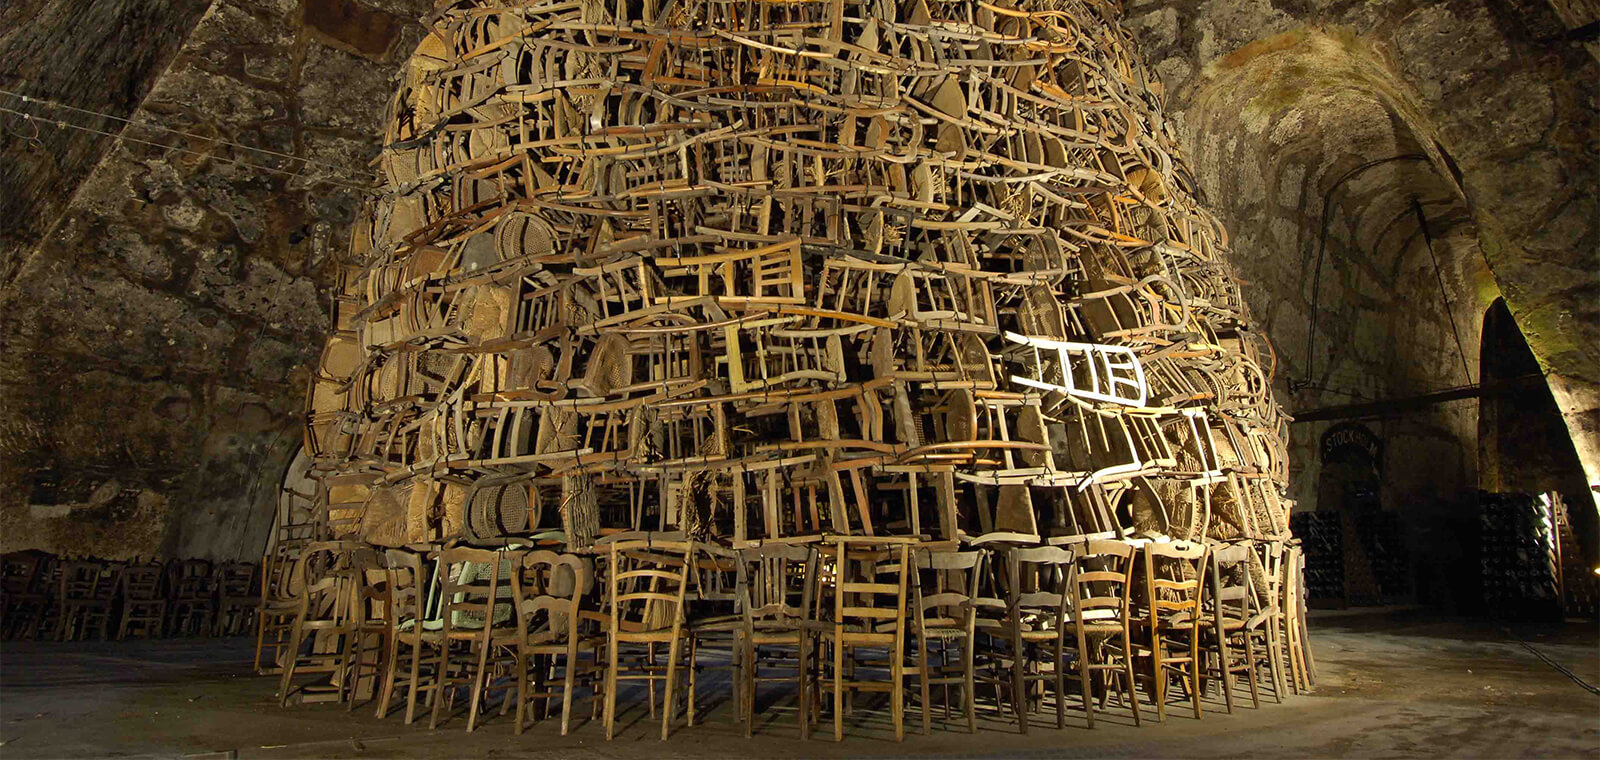 Tadashi Kawamata, Cathédrale des chaises, 2007